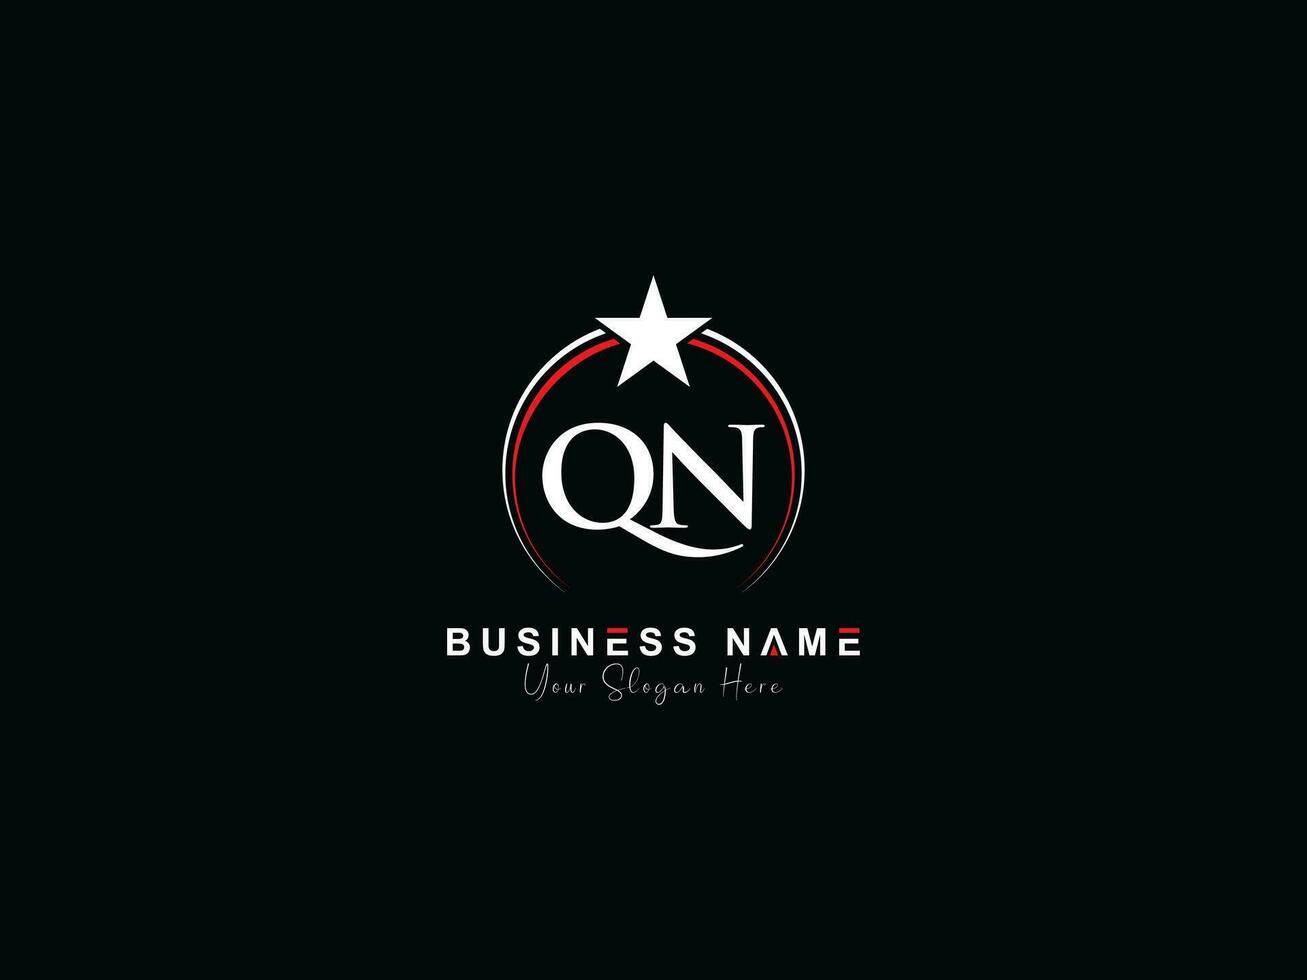 Premium Royal Star Qn Logo Vector, Unique Circle QN Logo Letter Vector Image